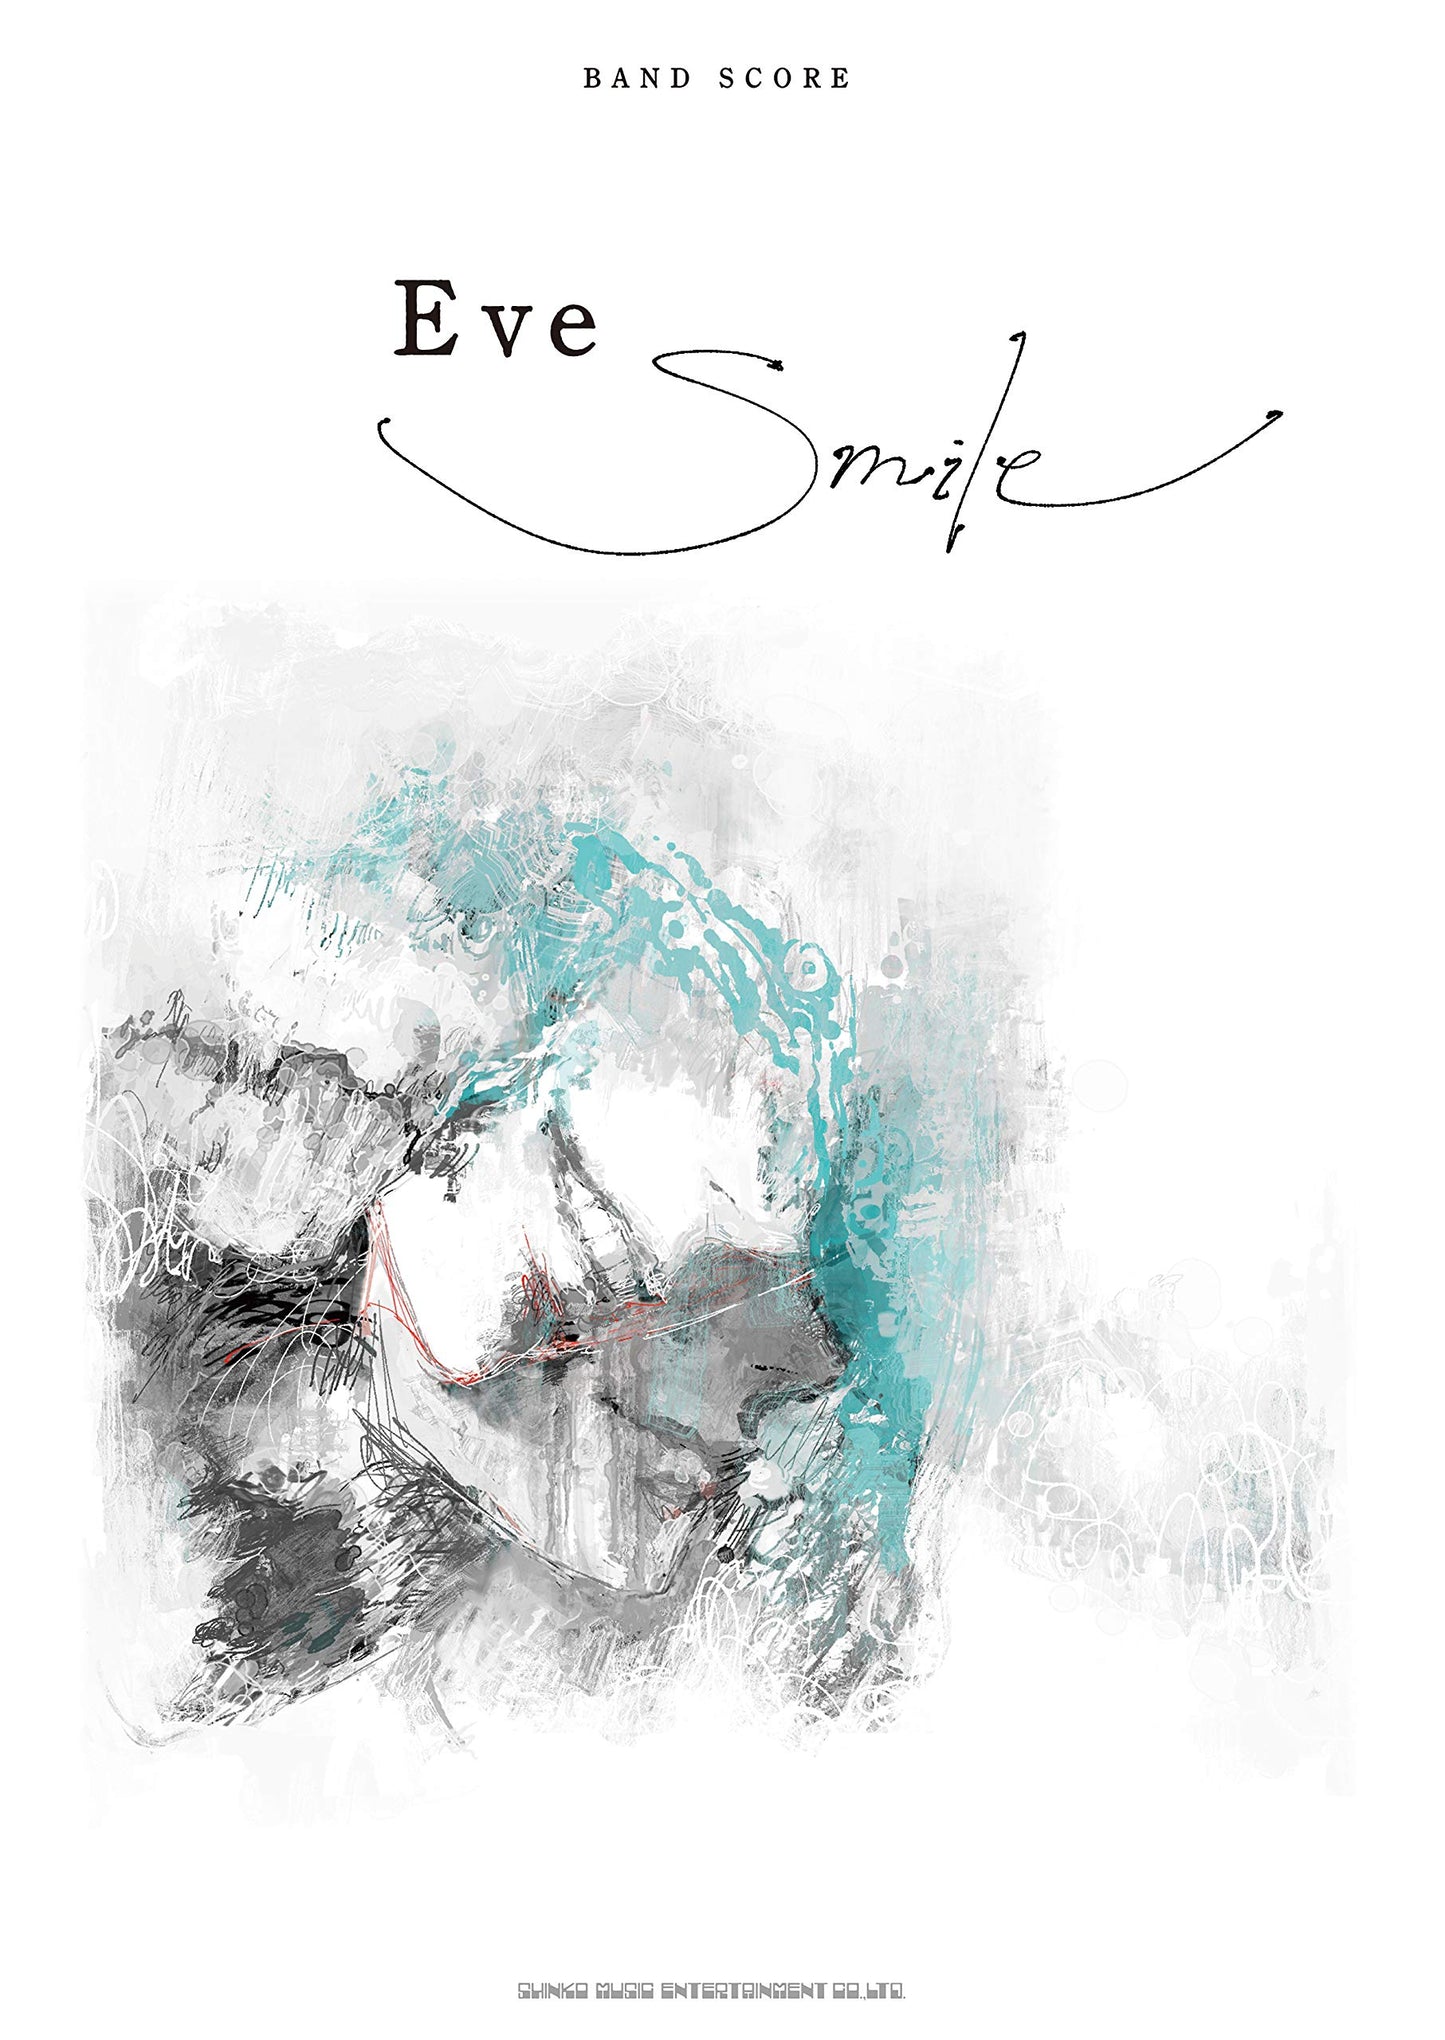 Eve "Smile" Band Score TAB